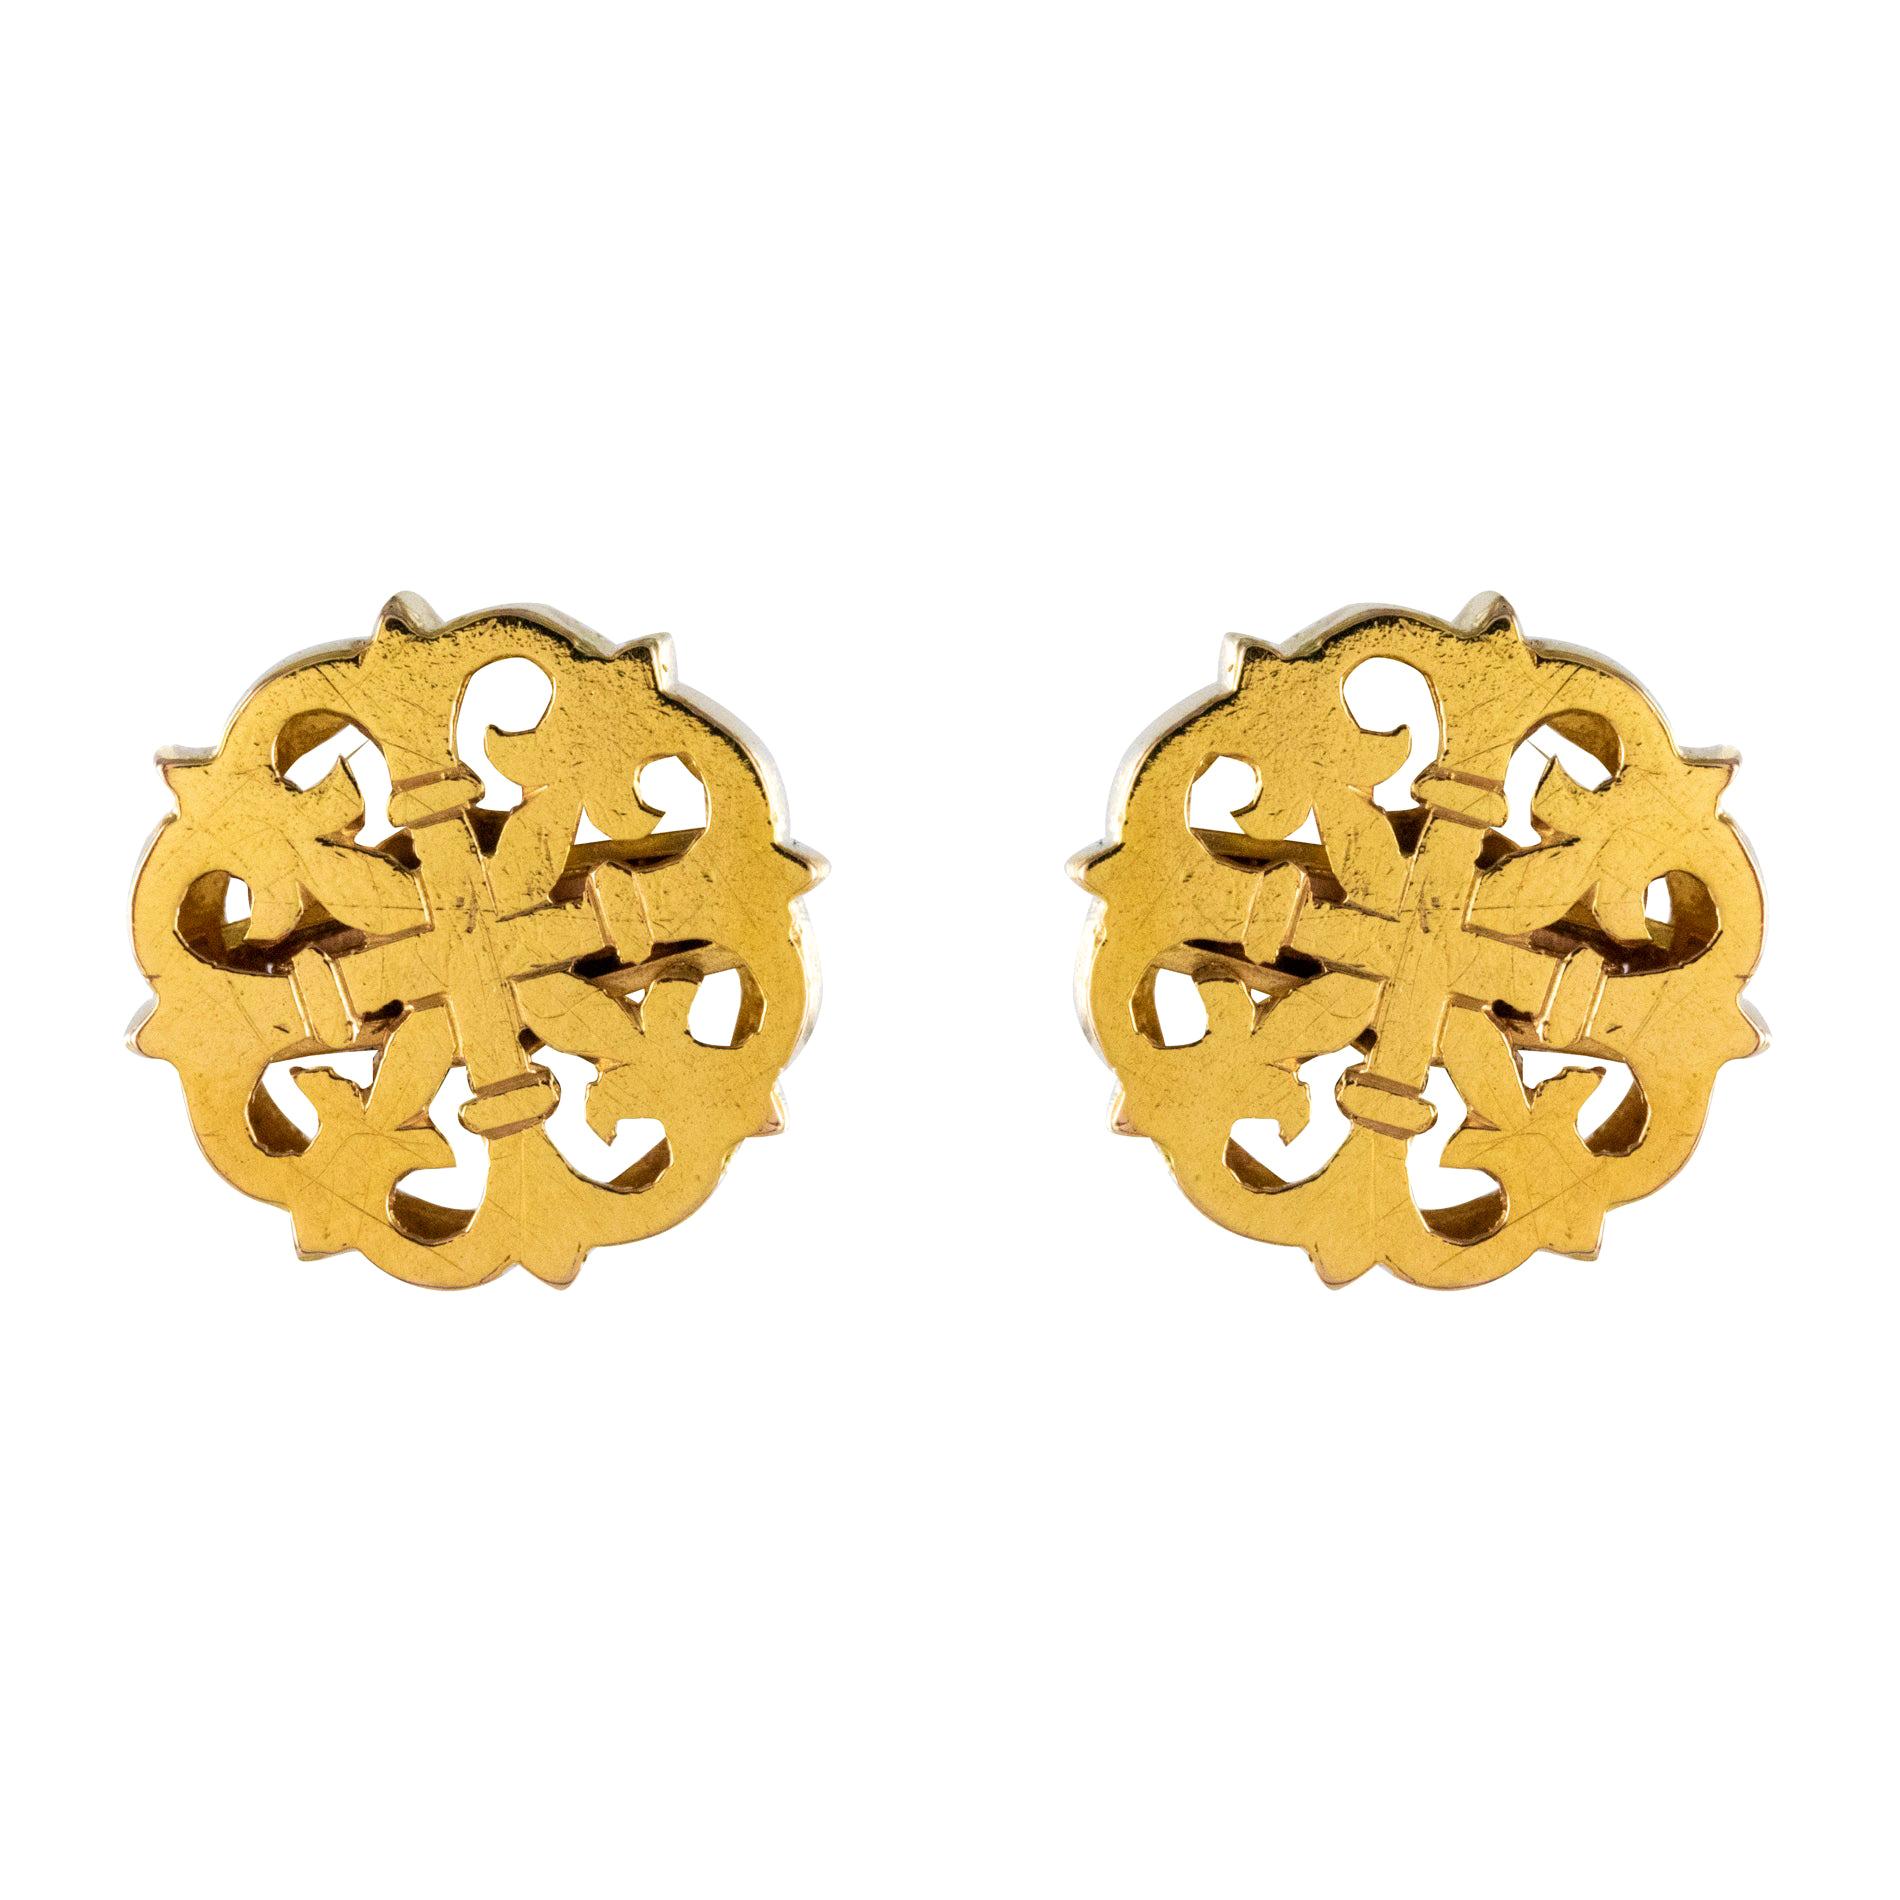 19th Century 18 Karat Yellow Gold Stud Earrings